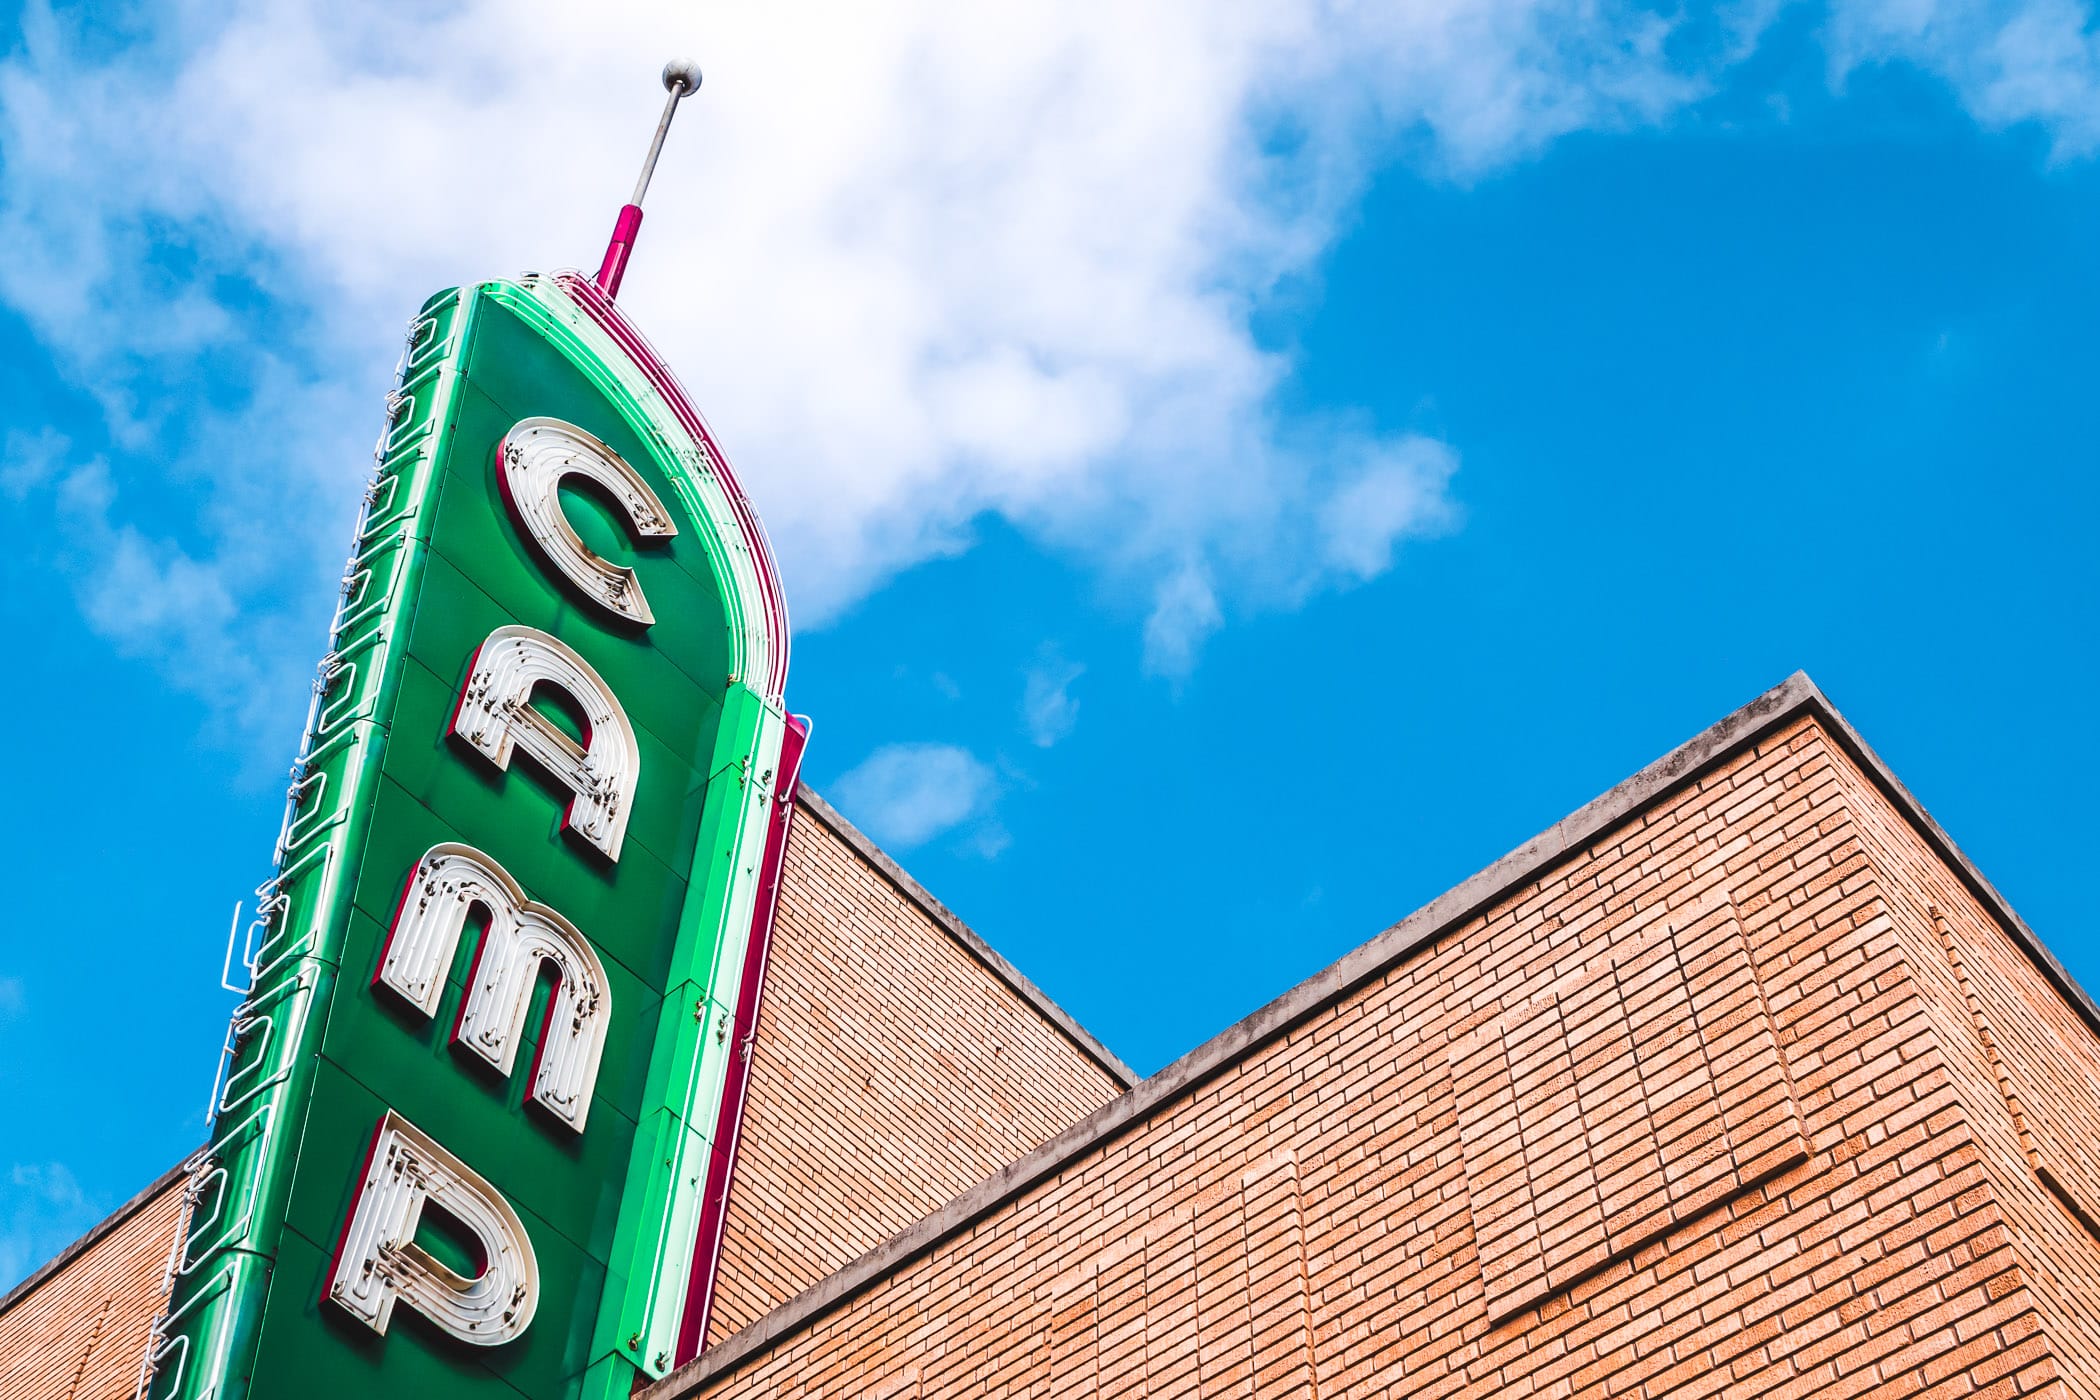 Denton, Texas' Campus Theatre's sign rises into the North Texas sky.